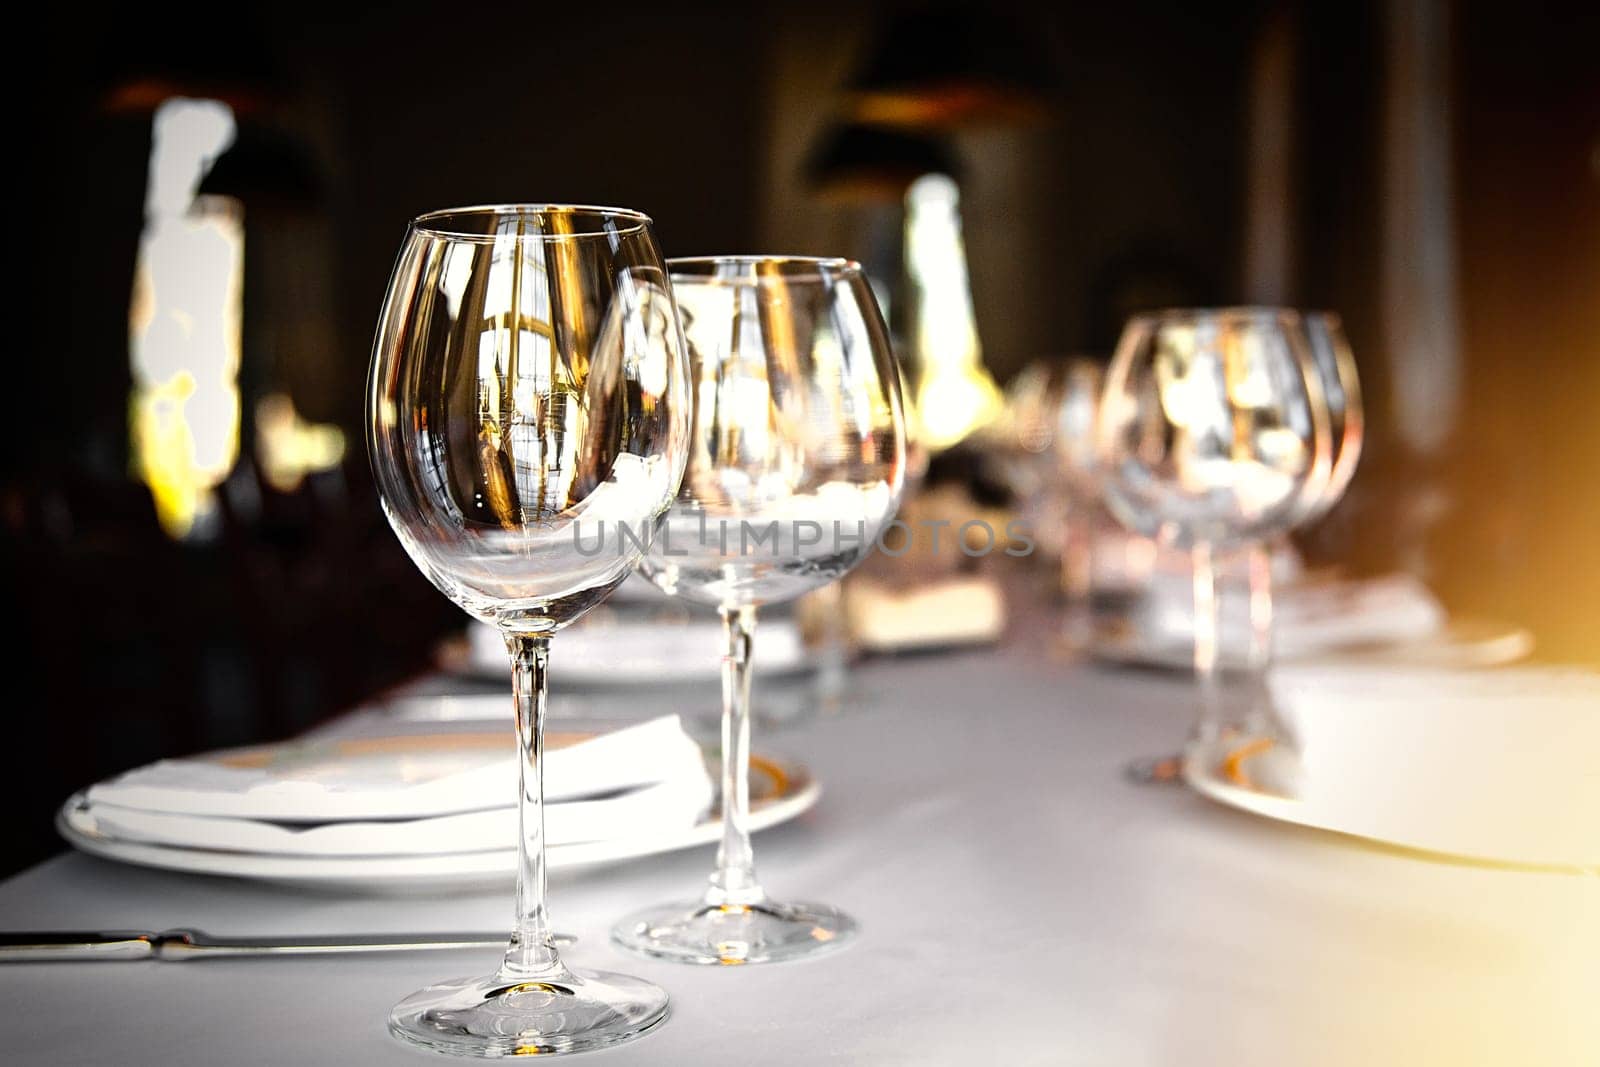 Served dinner table set in a luxury restaurant. Restaurant interior with window lighting by Rom4ek